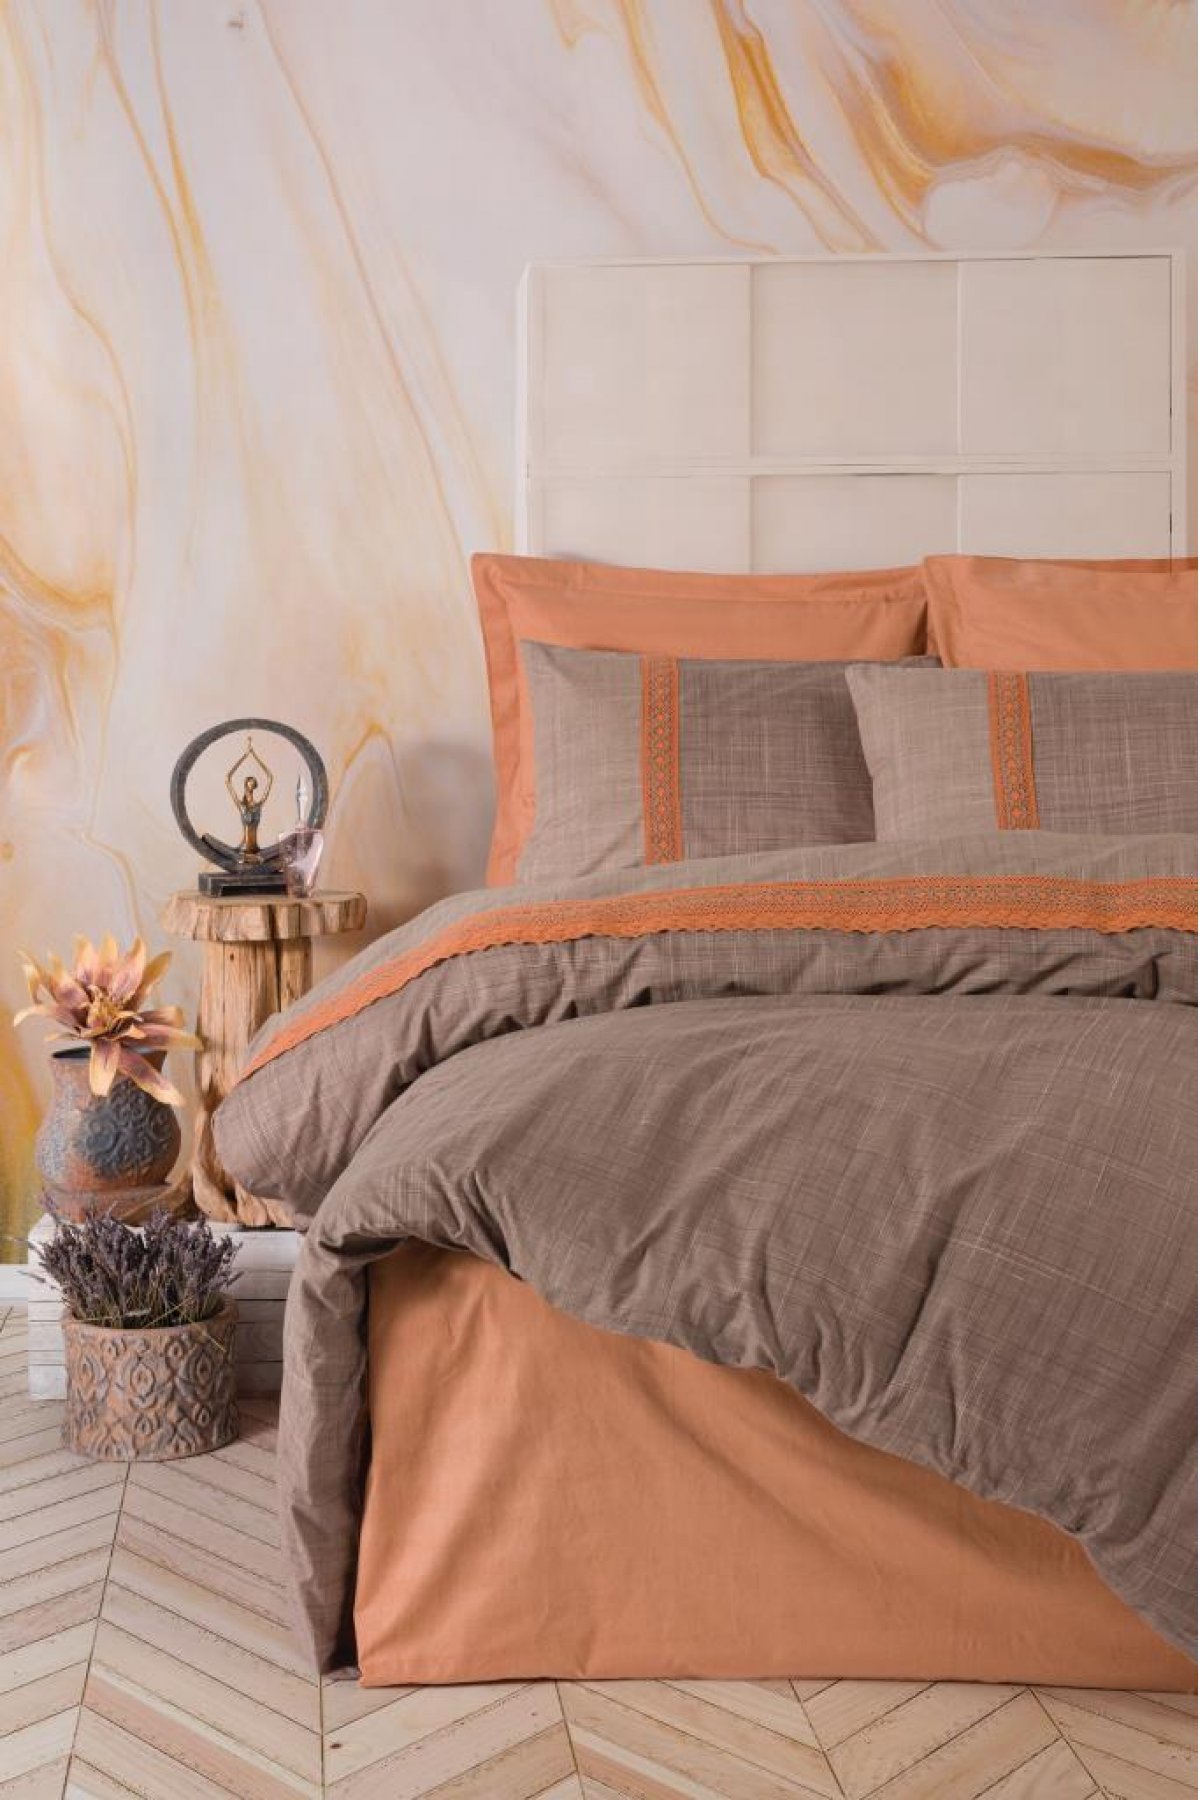 Bedding-Orange